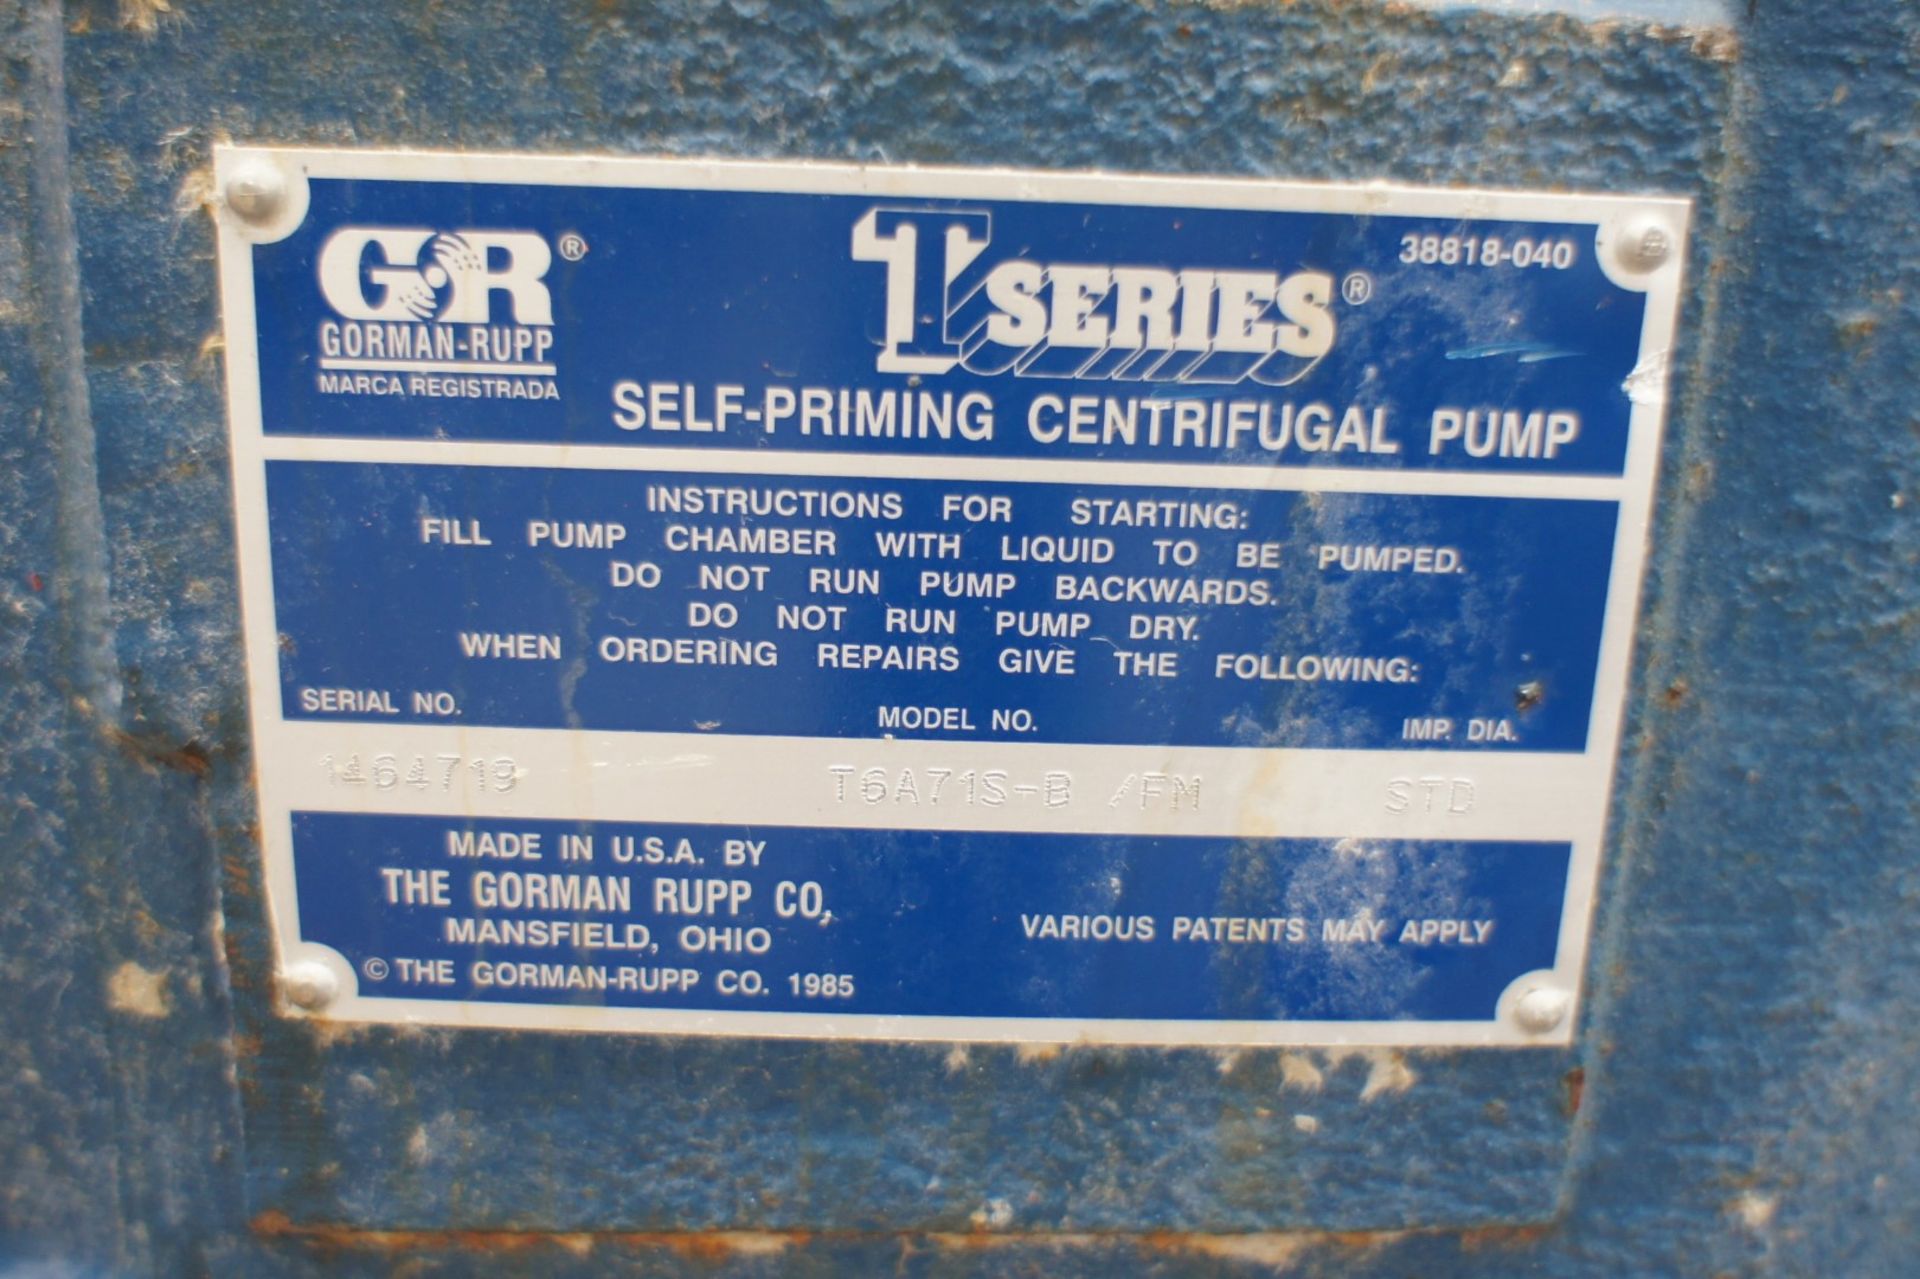 * Gormann Rupp 'T' Series self-priming centrifugal pump, T6A715-B/FM - Bild 3 aus 3